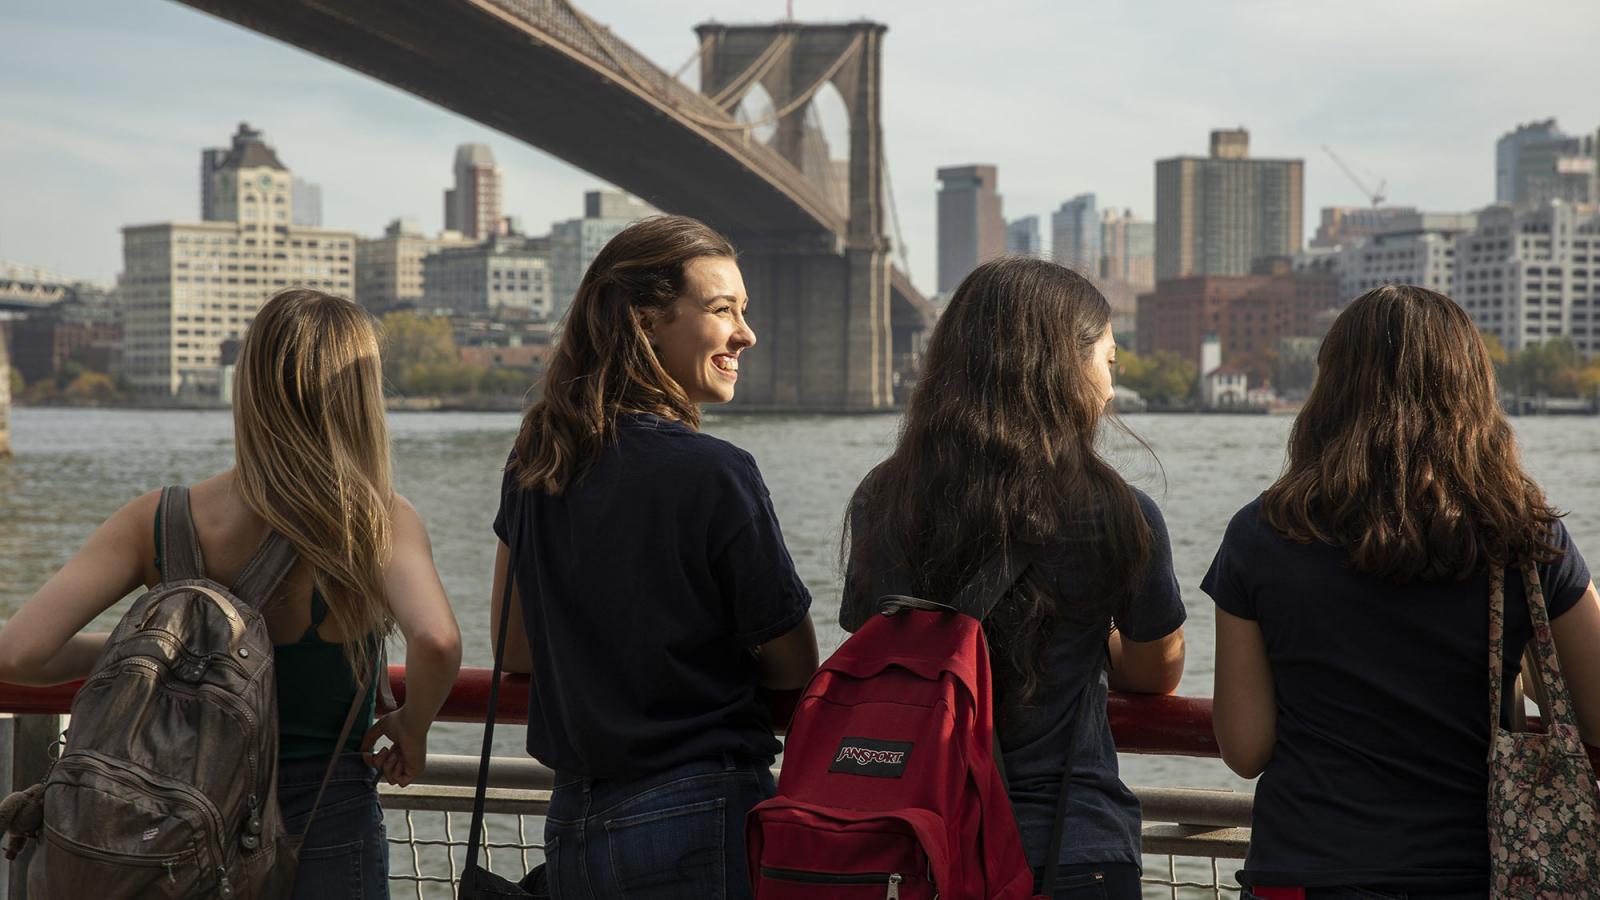  students standing underneath the Brooklyn Bridge